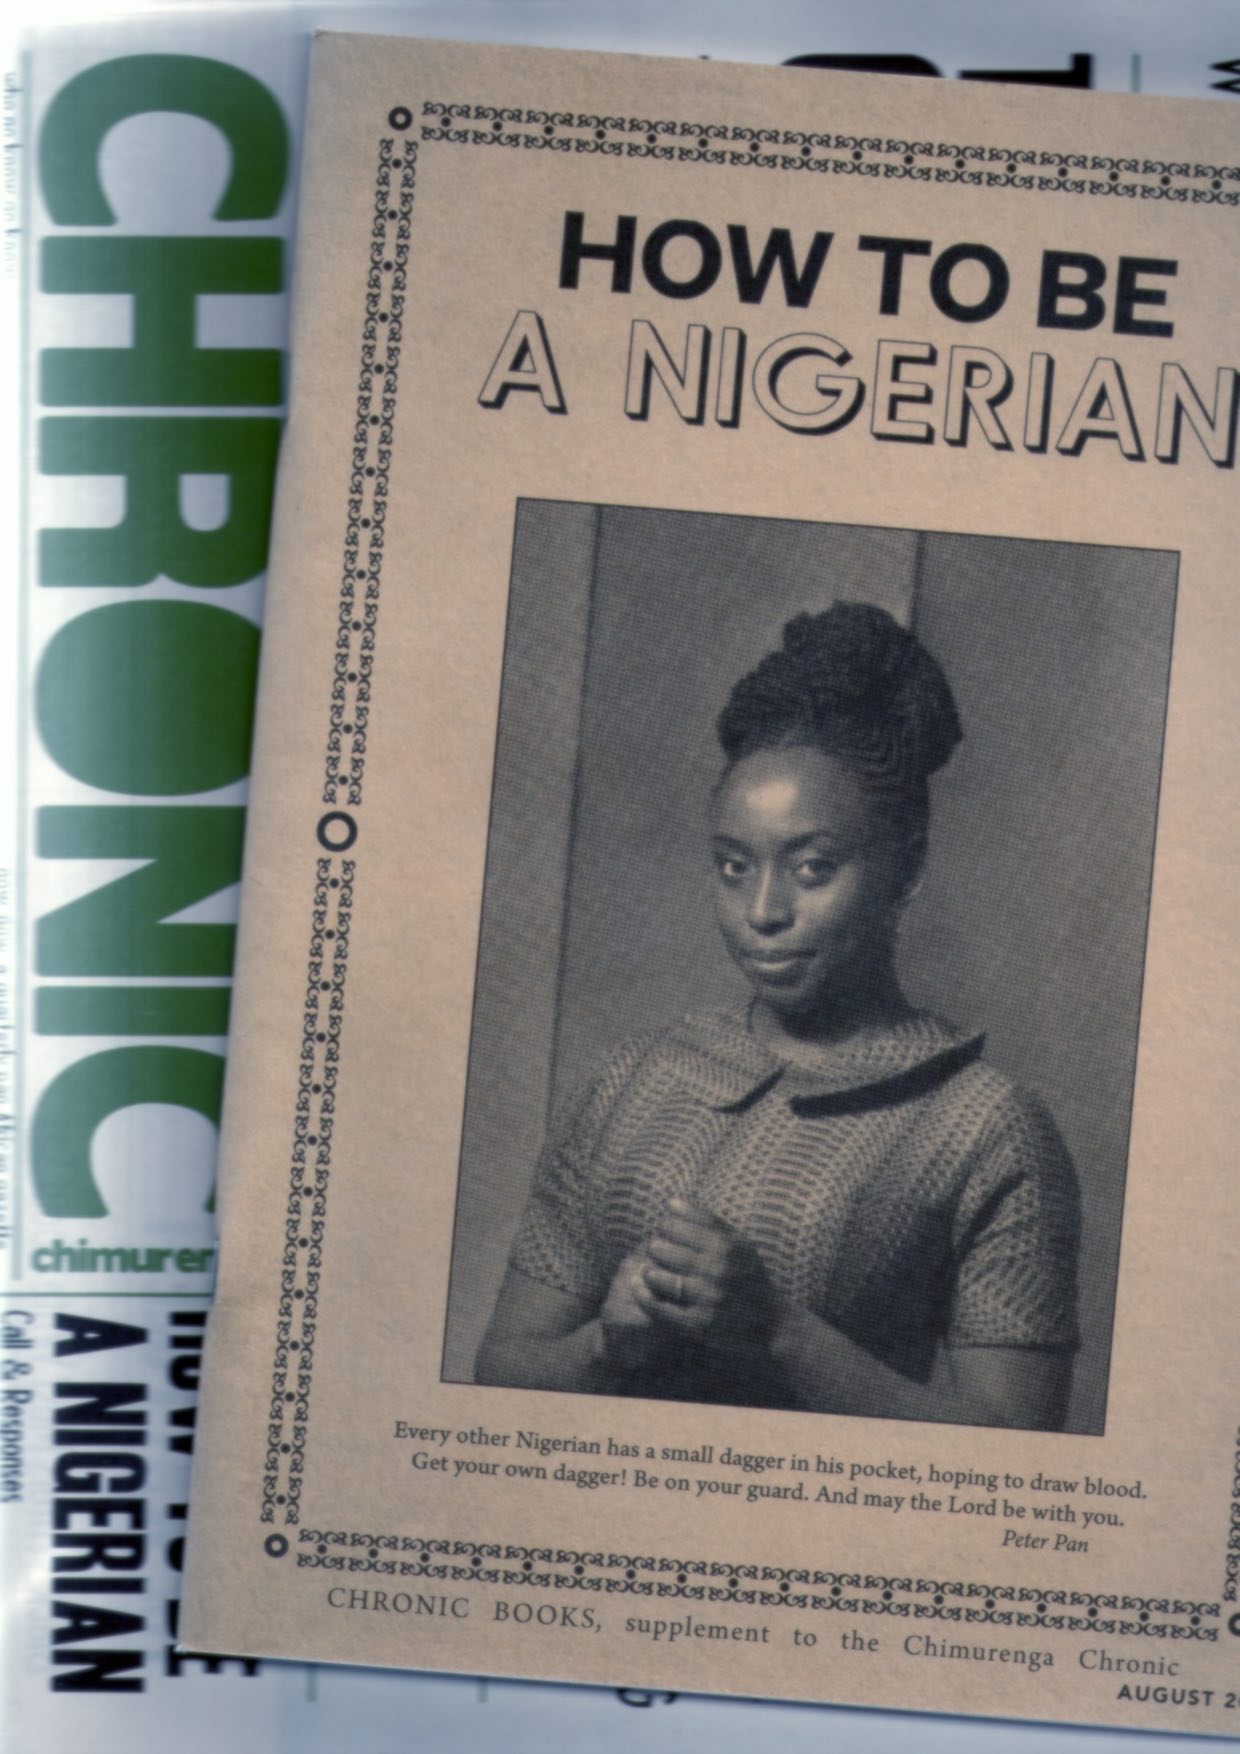 EDJABE, Ntone (ed.) - The Chimurenga Chronic (August 2013)